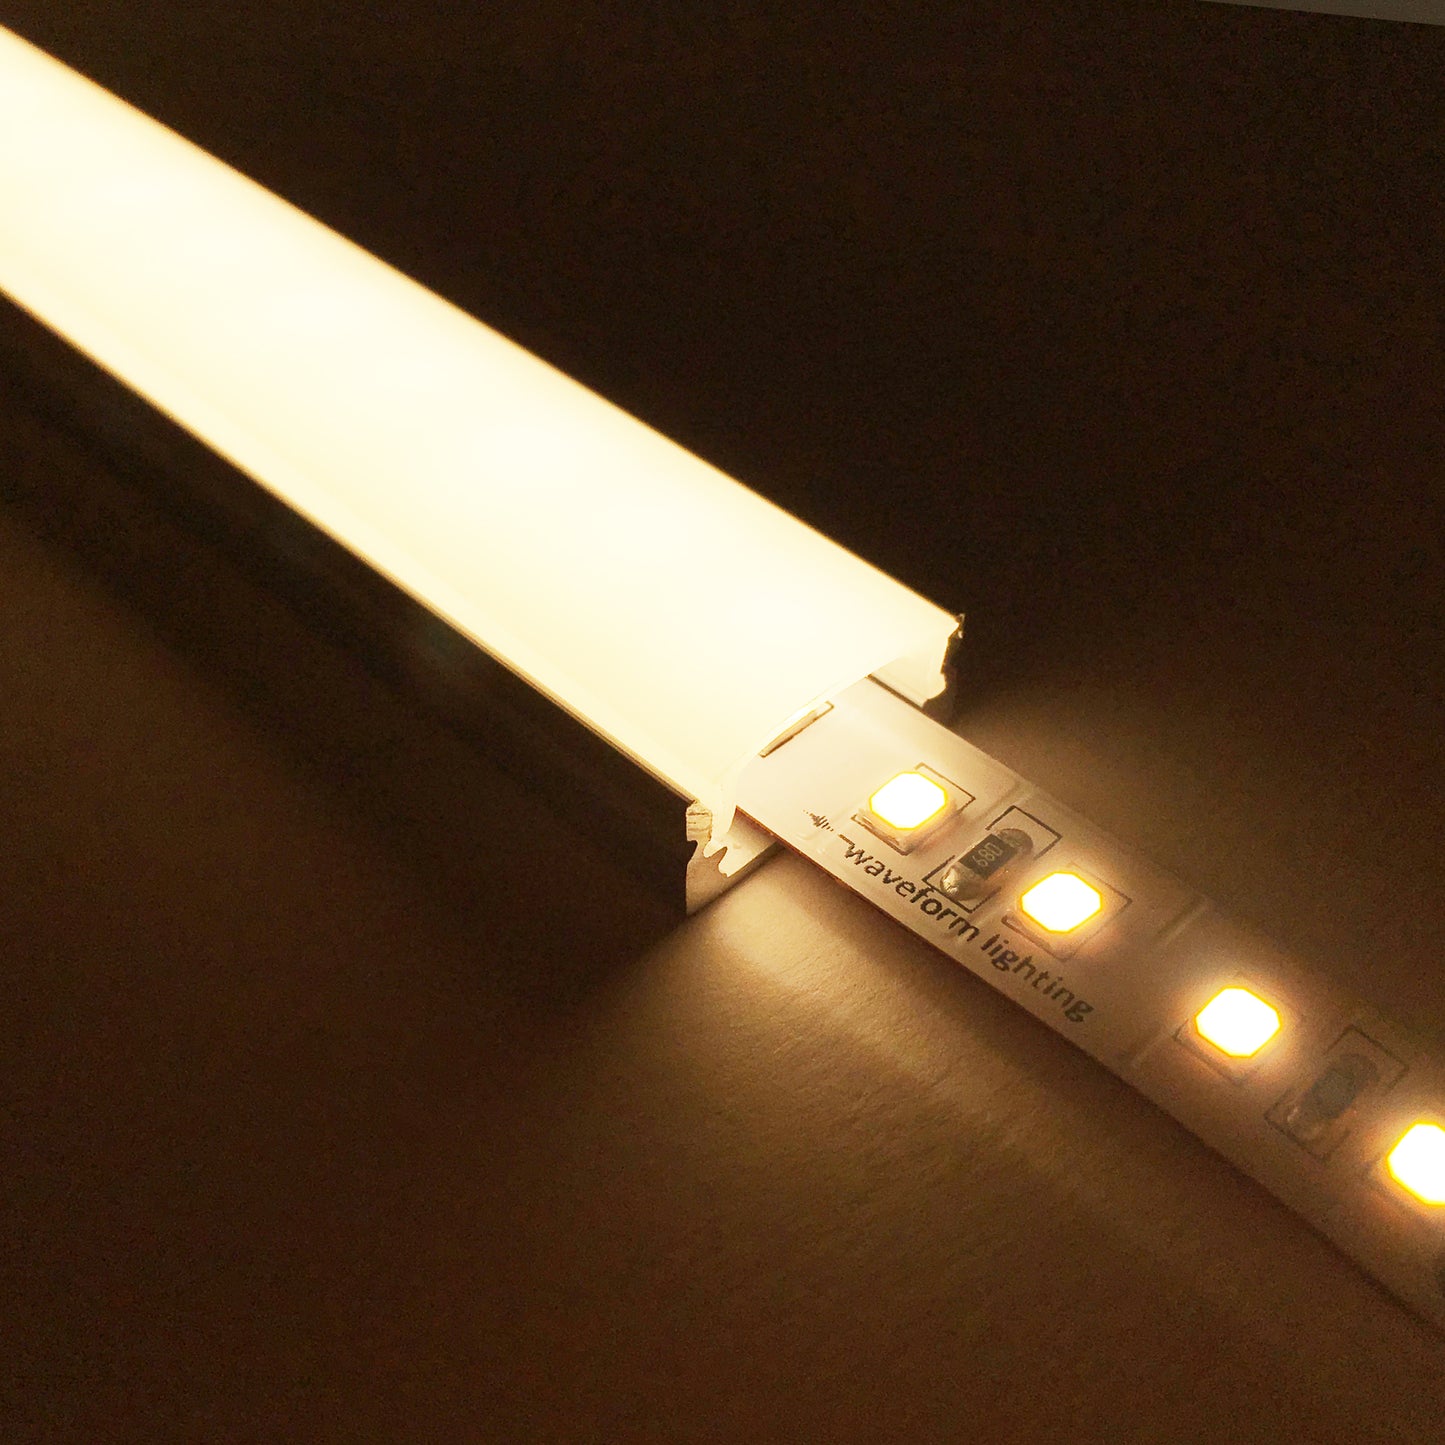 Aluminum Channel for LED Flex Strip - 5 PACK